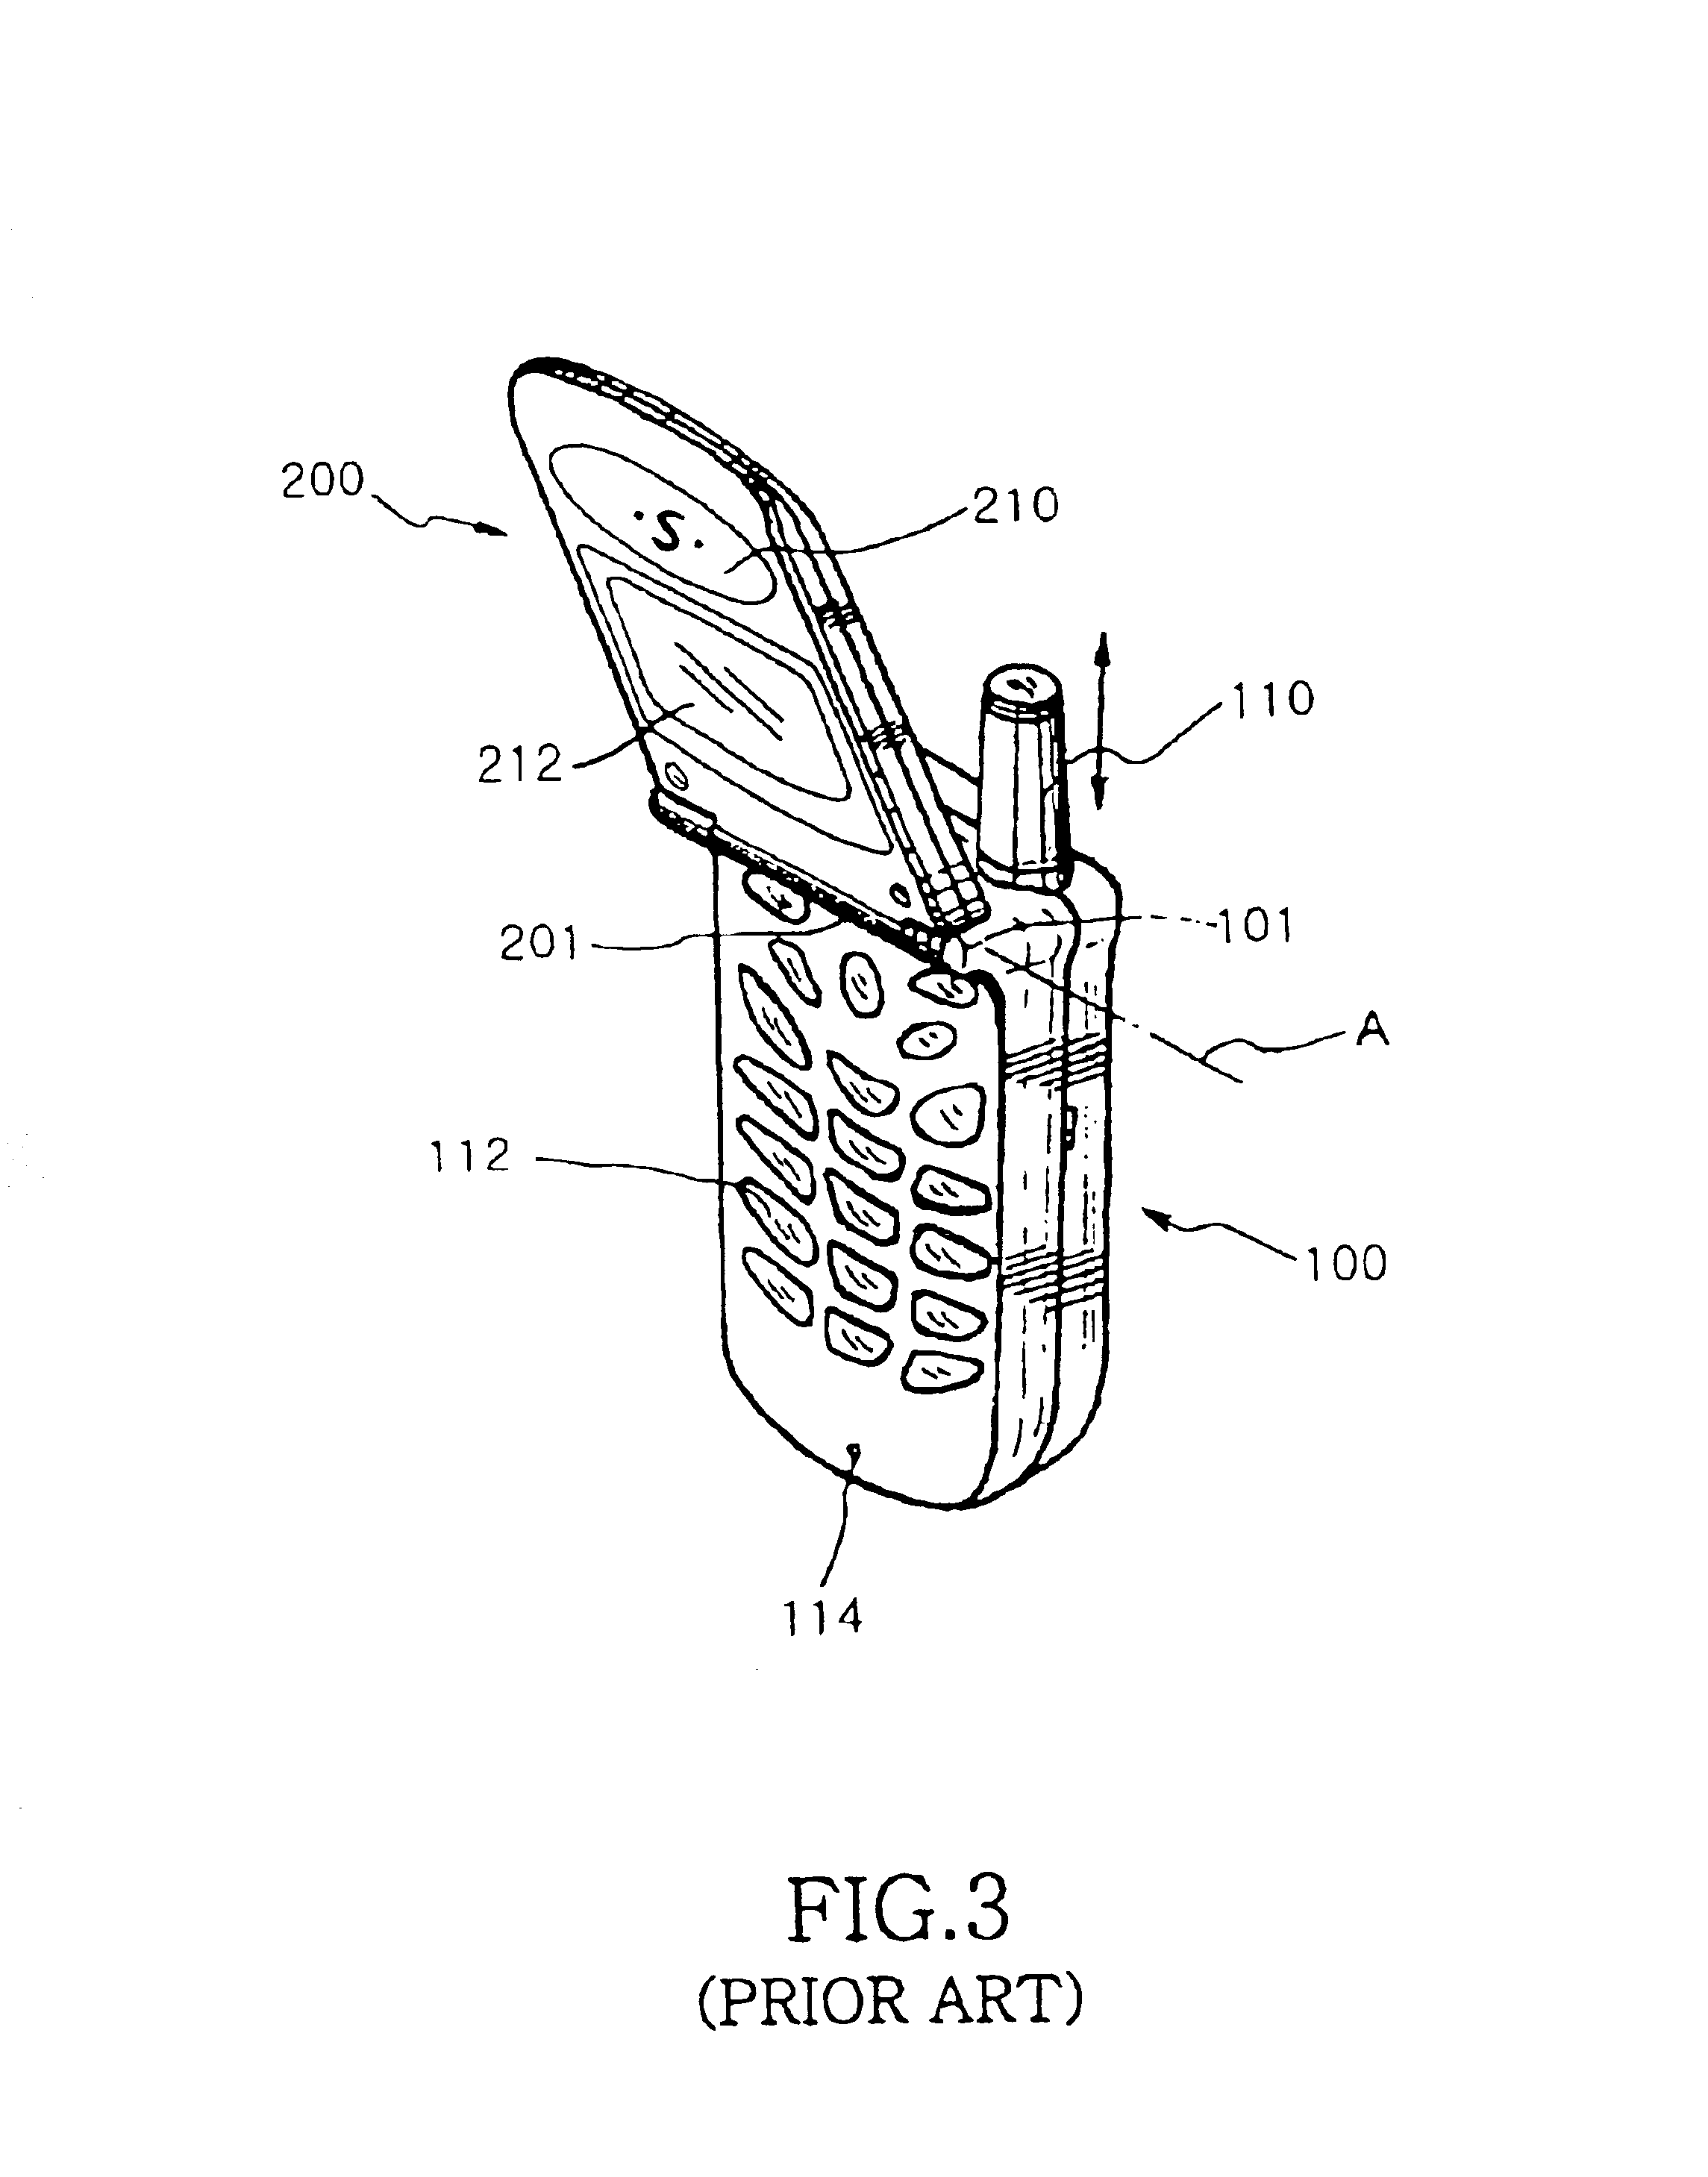 Antenna apparatus for folder type mobile phone